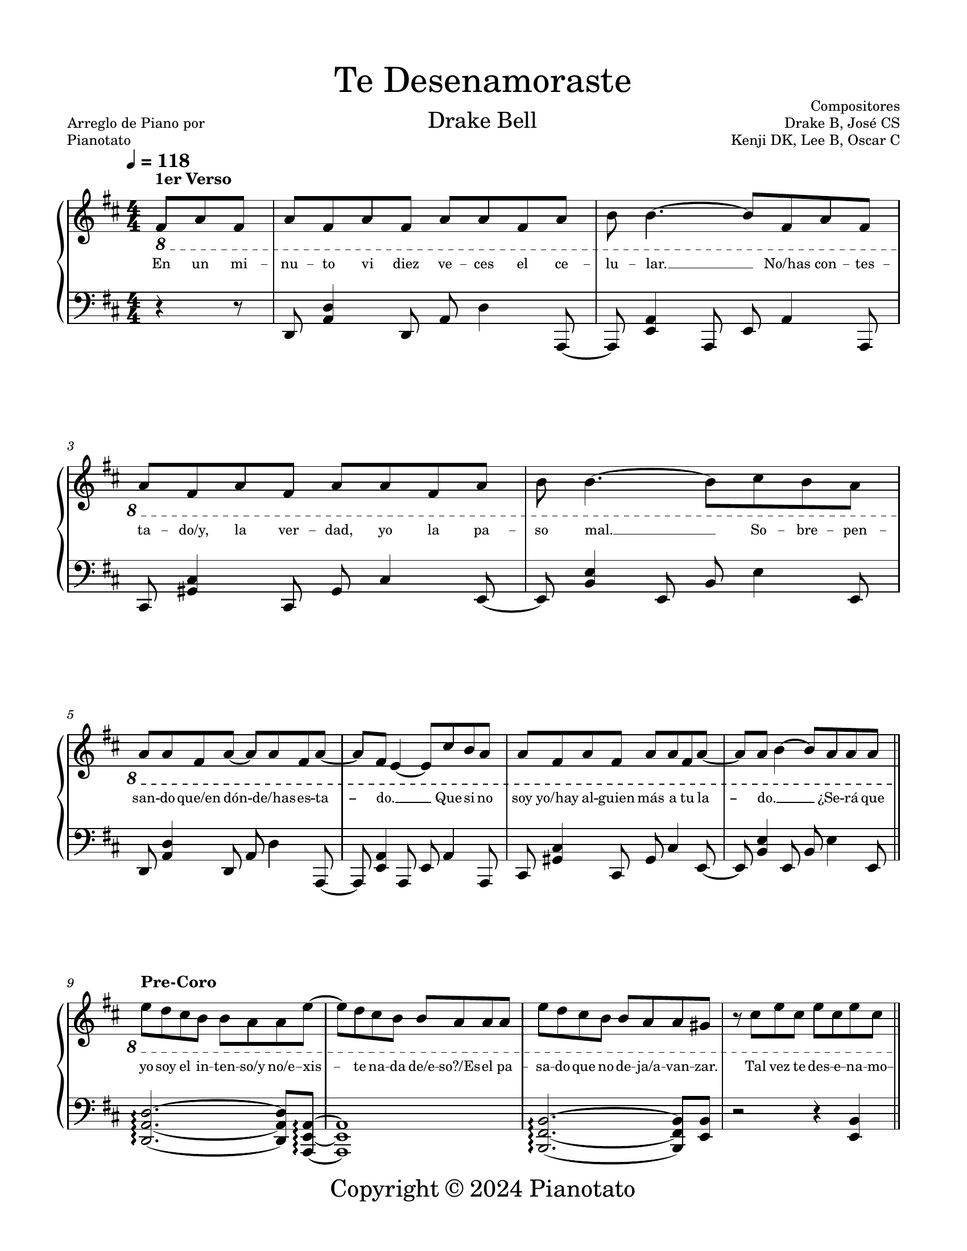 Drake Bell - Te Desenamoraste by Pianotato